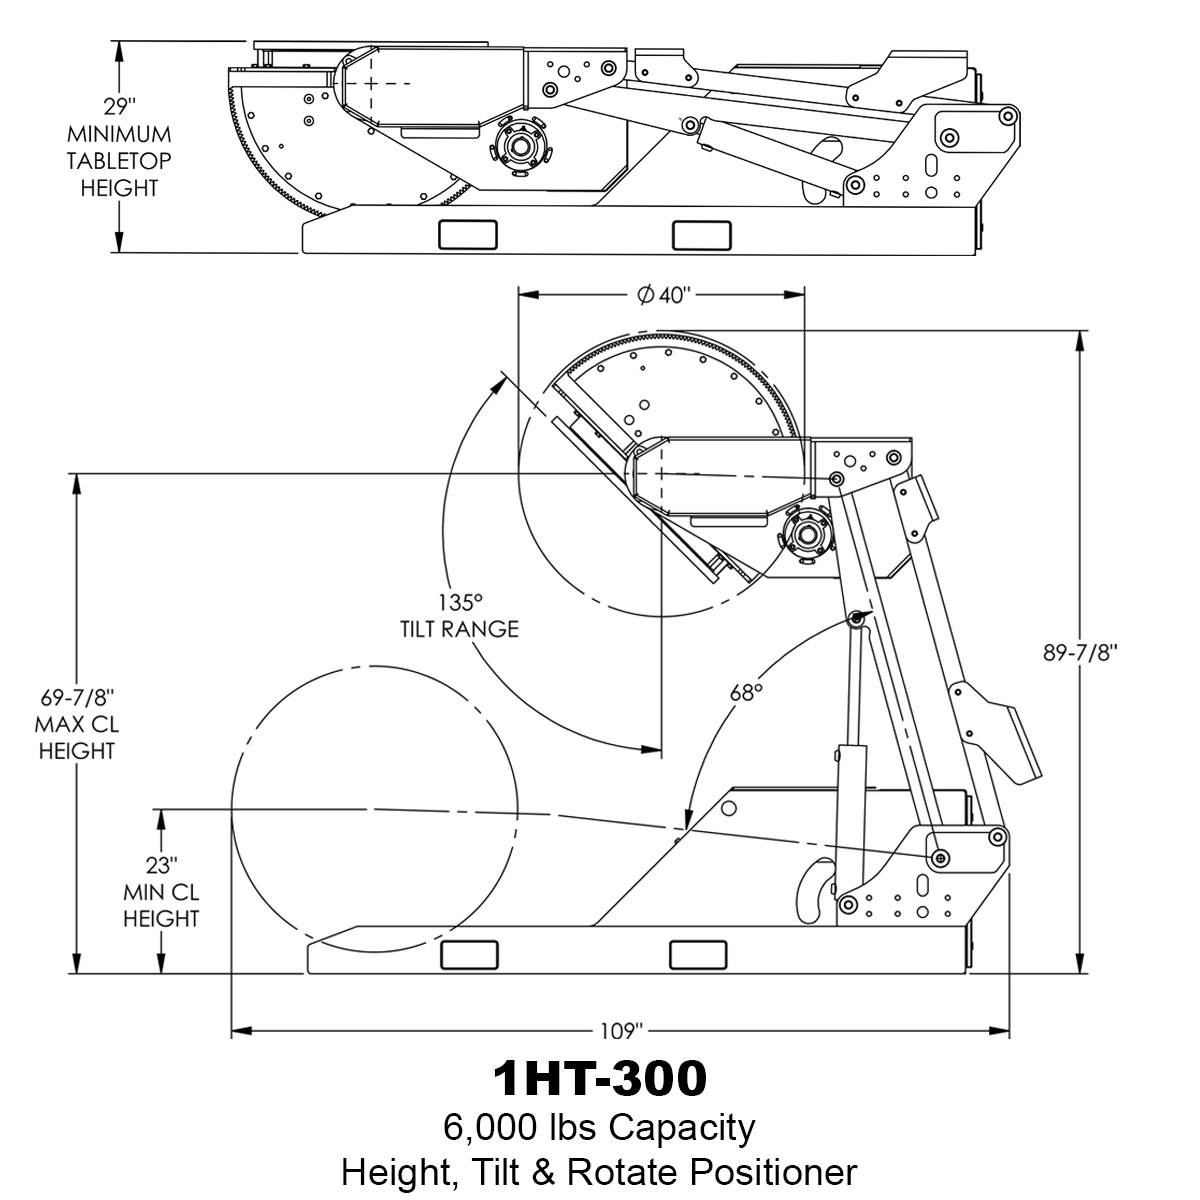 04-6000lb-Height-Tilt-Rotate-Positioner